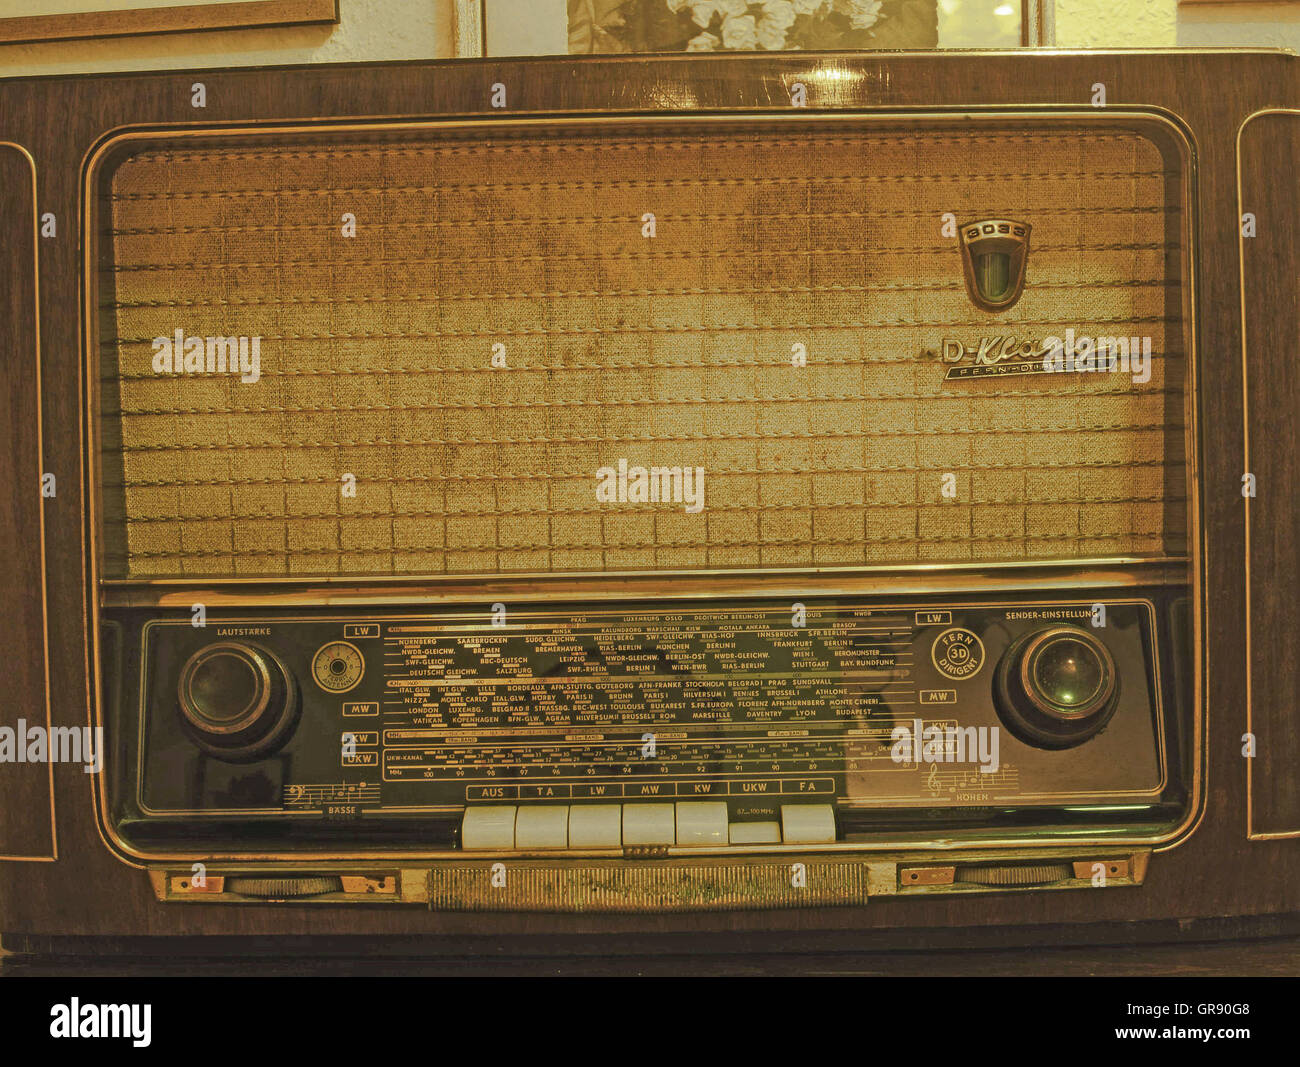 Grundig radio hi-res stock photography and images - Alamy